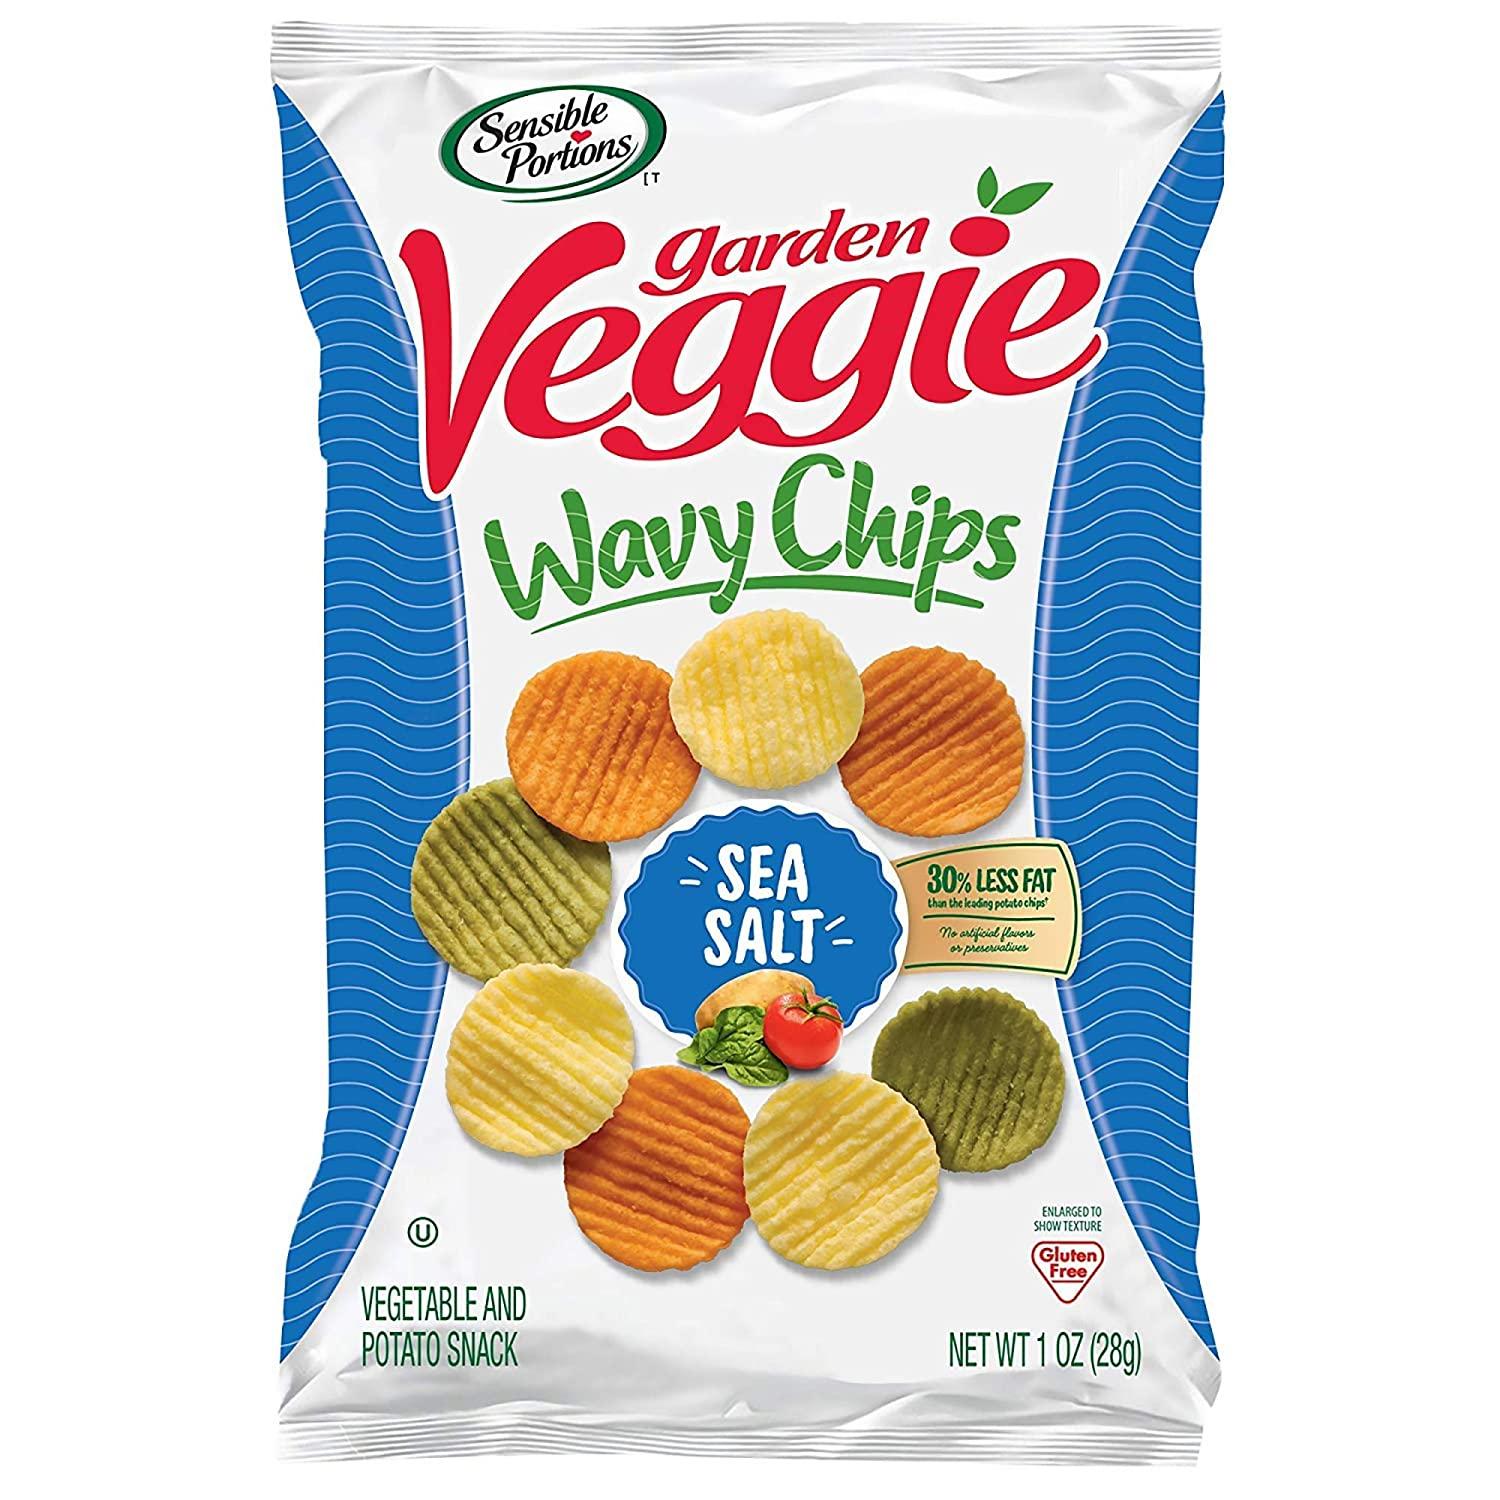 24 Sensible Portions Garden Veggie Chips for $10.73 Shipped